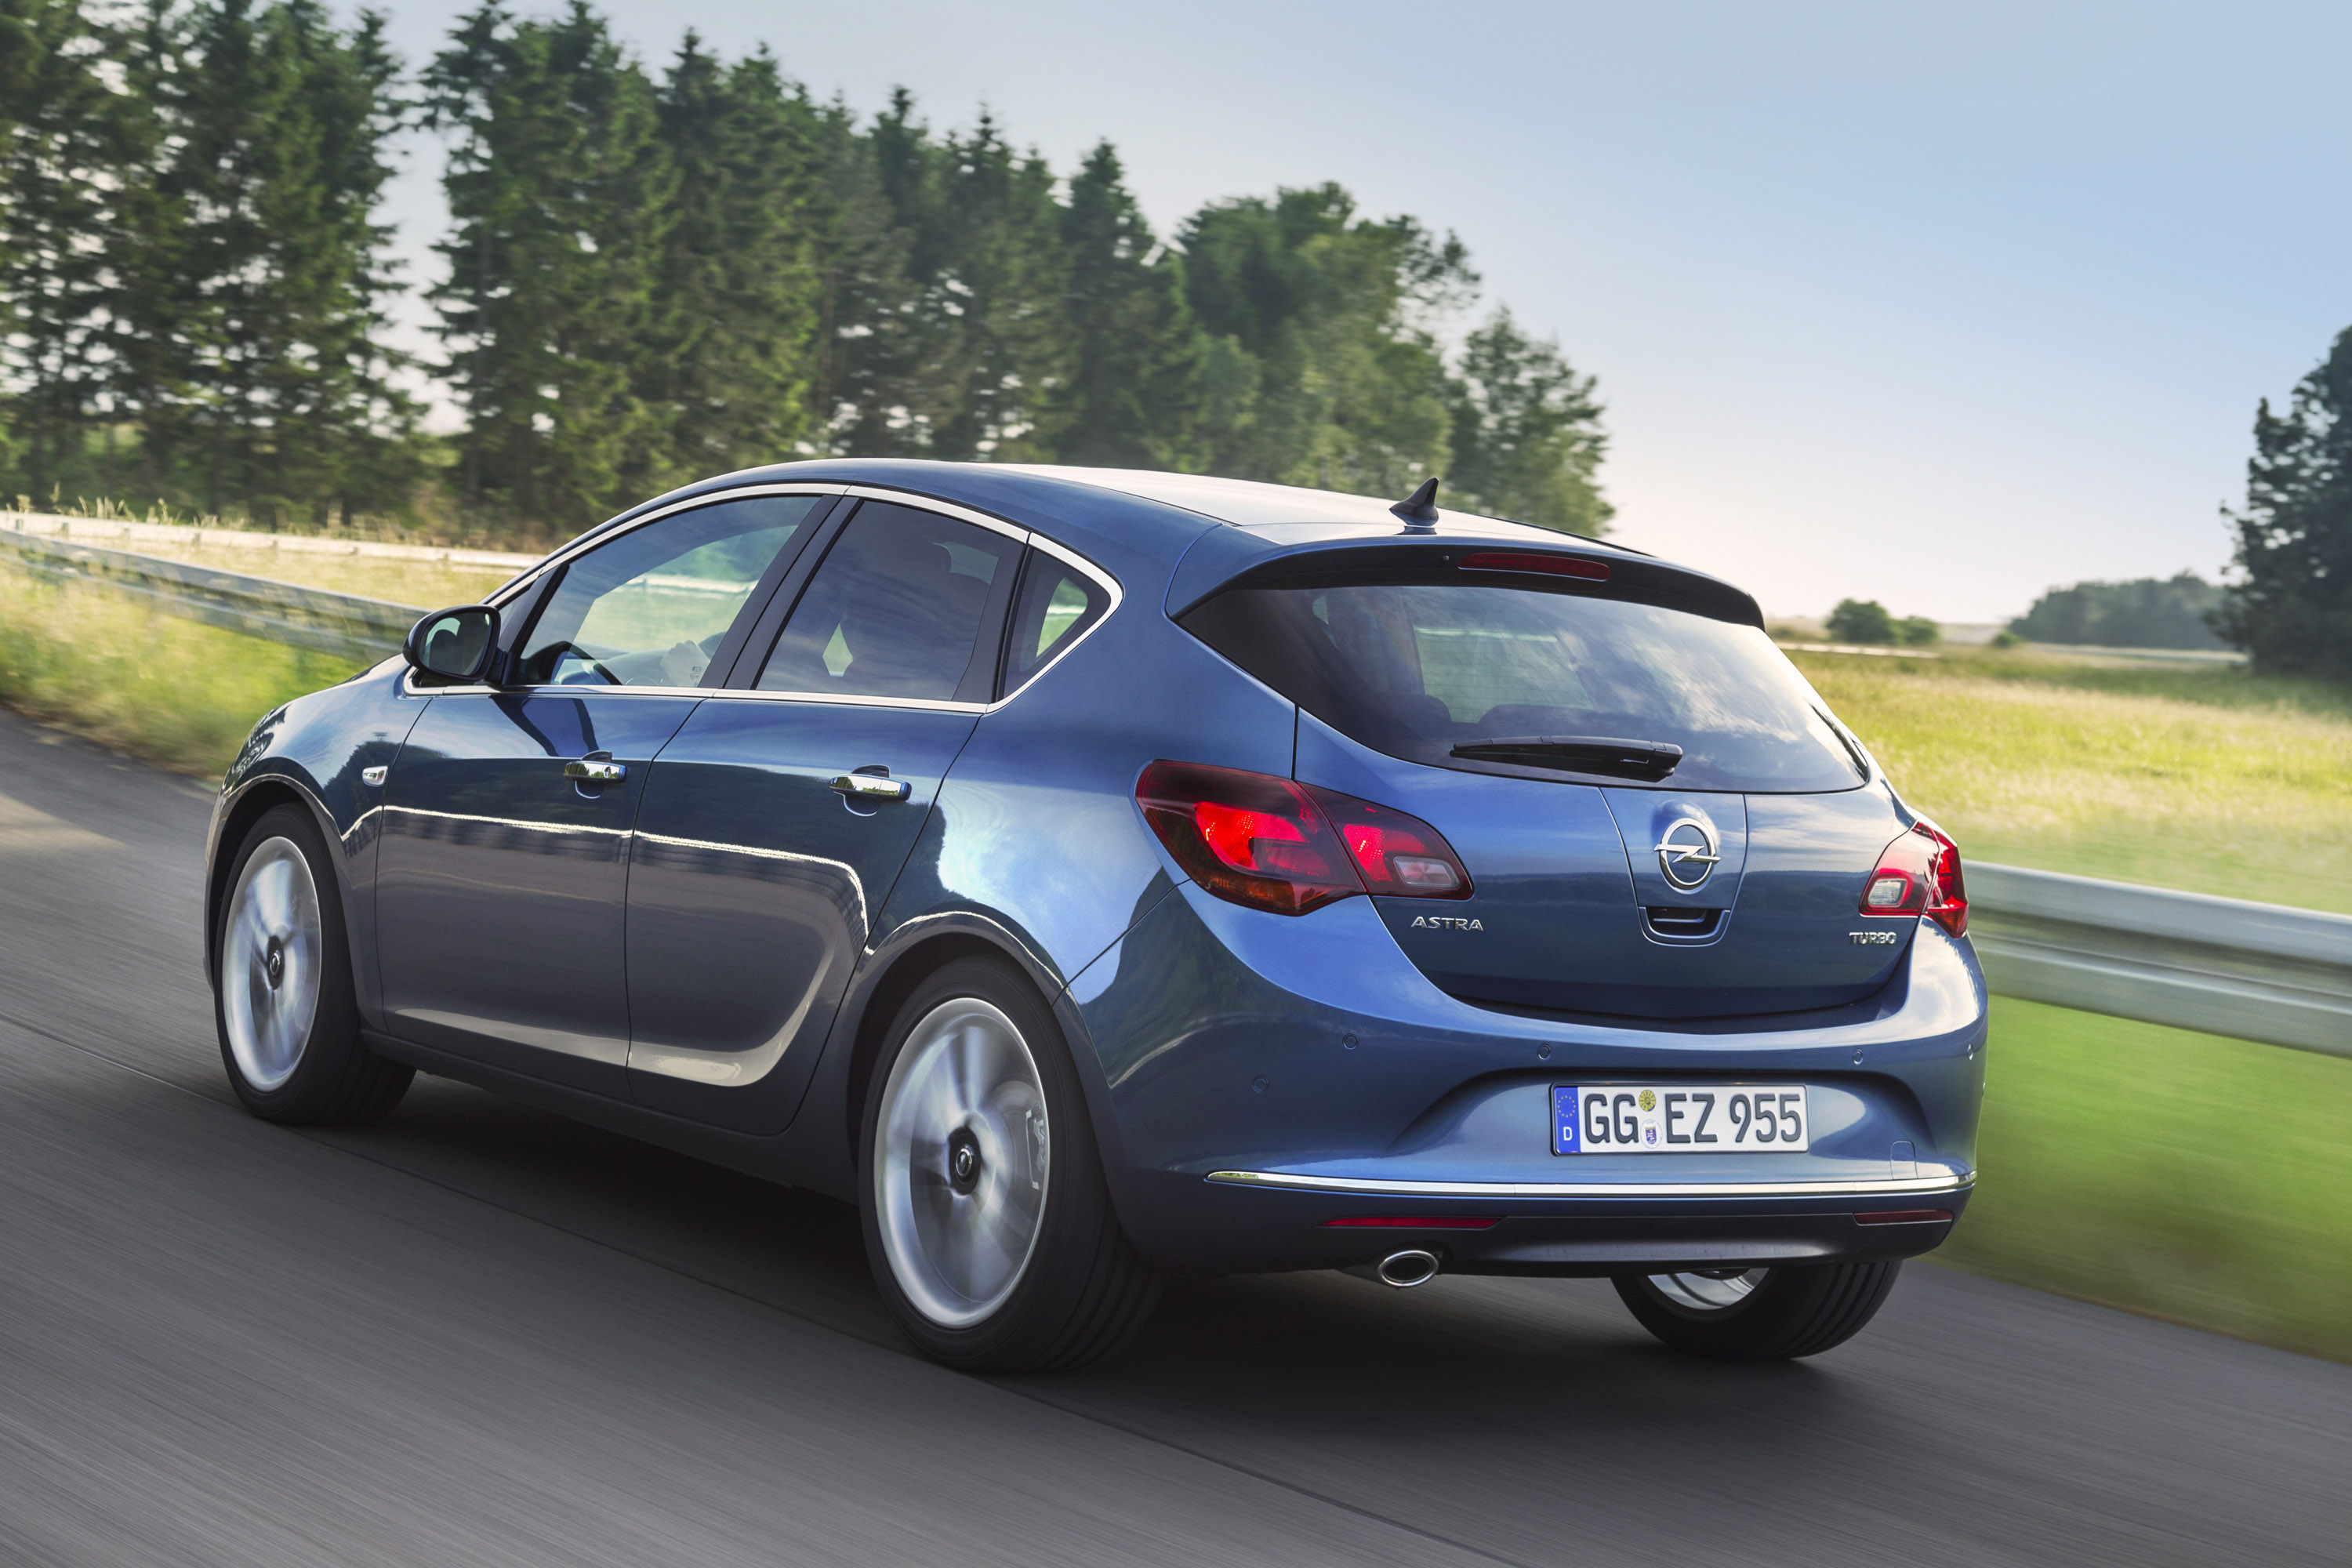 Б у авто опели. Opel Astra 2012. Opel Astra Hatchback. Opel Astra Hatchback 2012. Opel Astra j 2012.